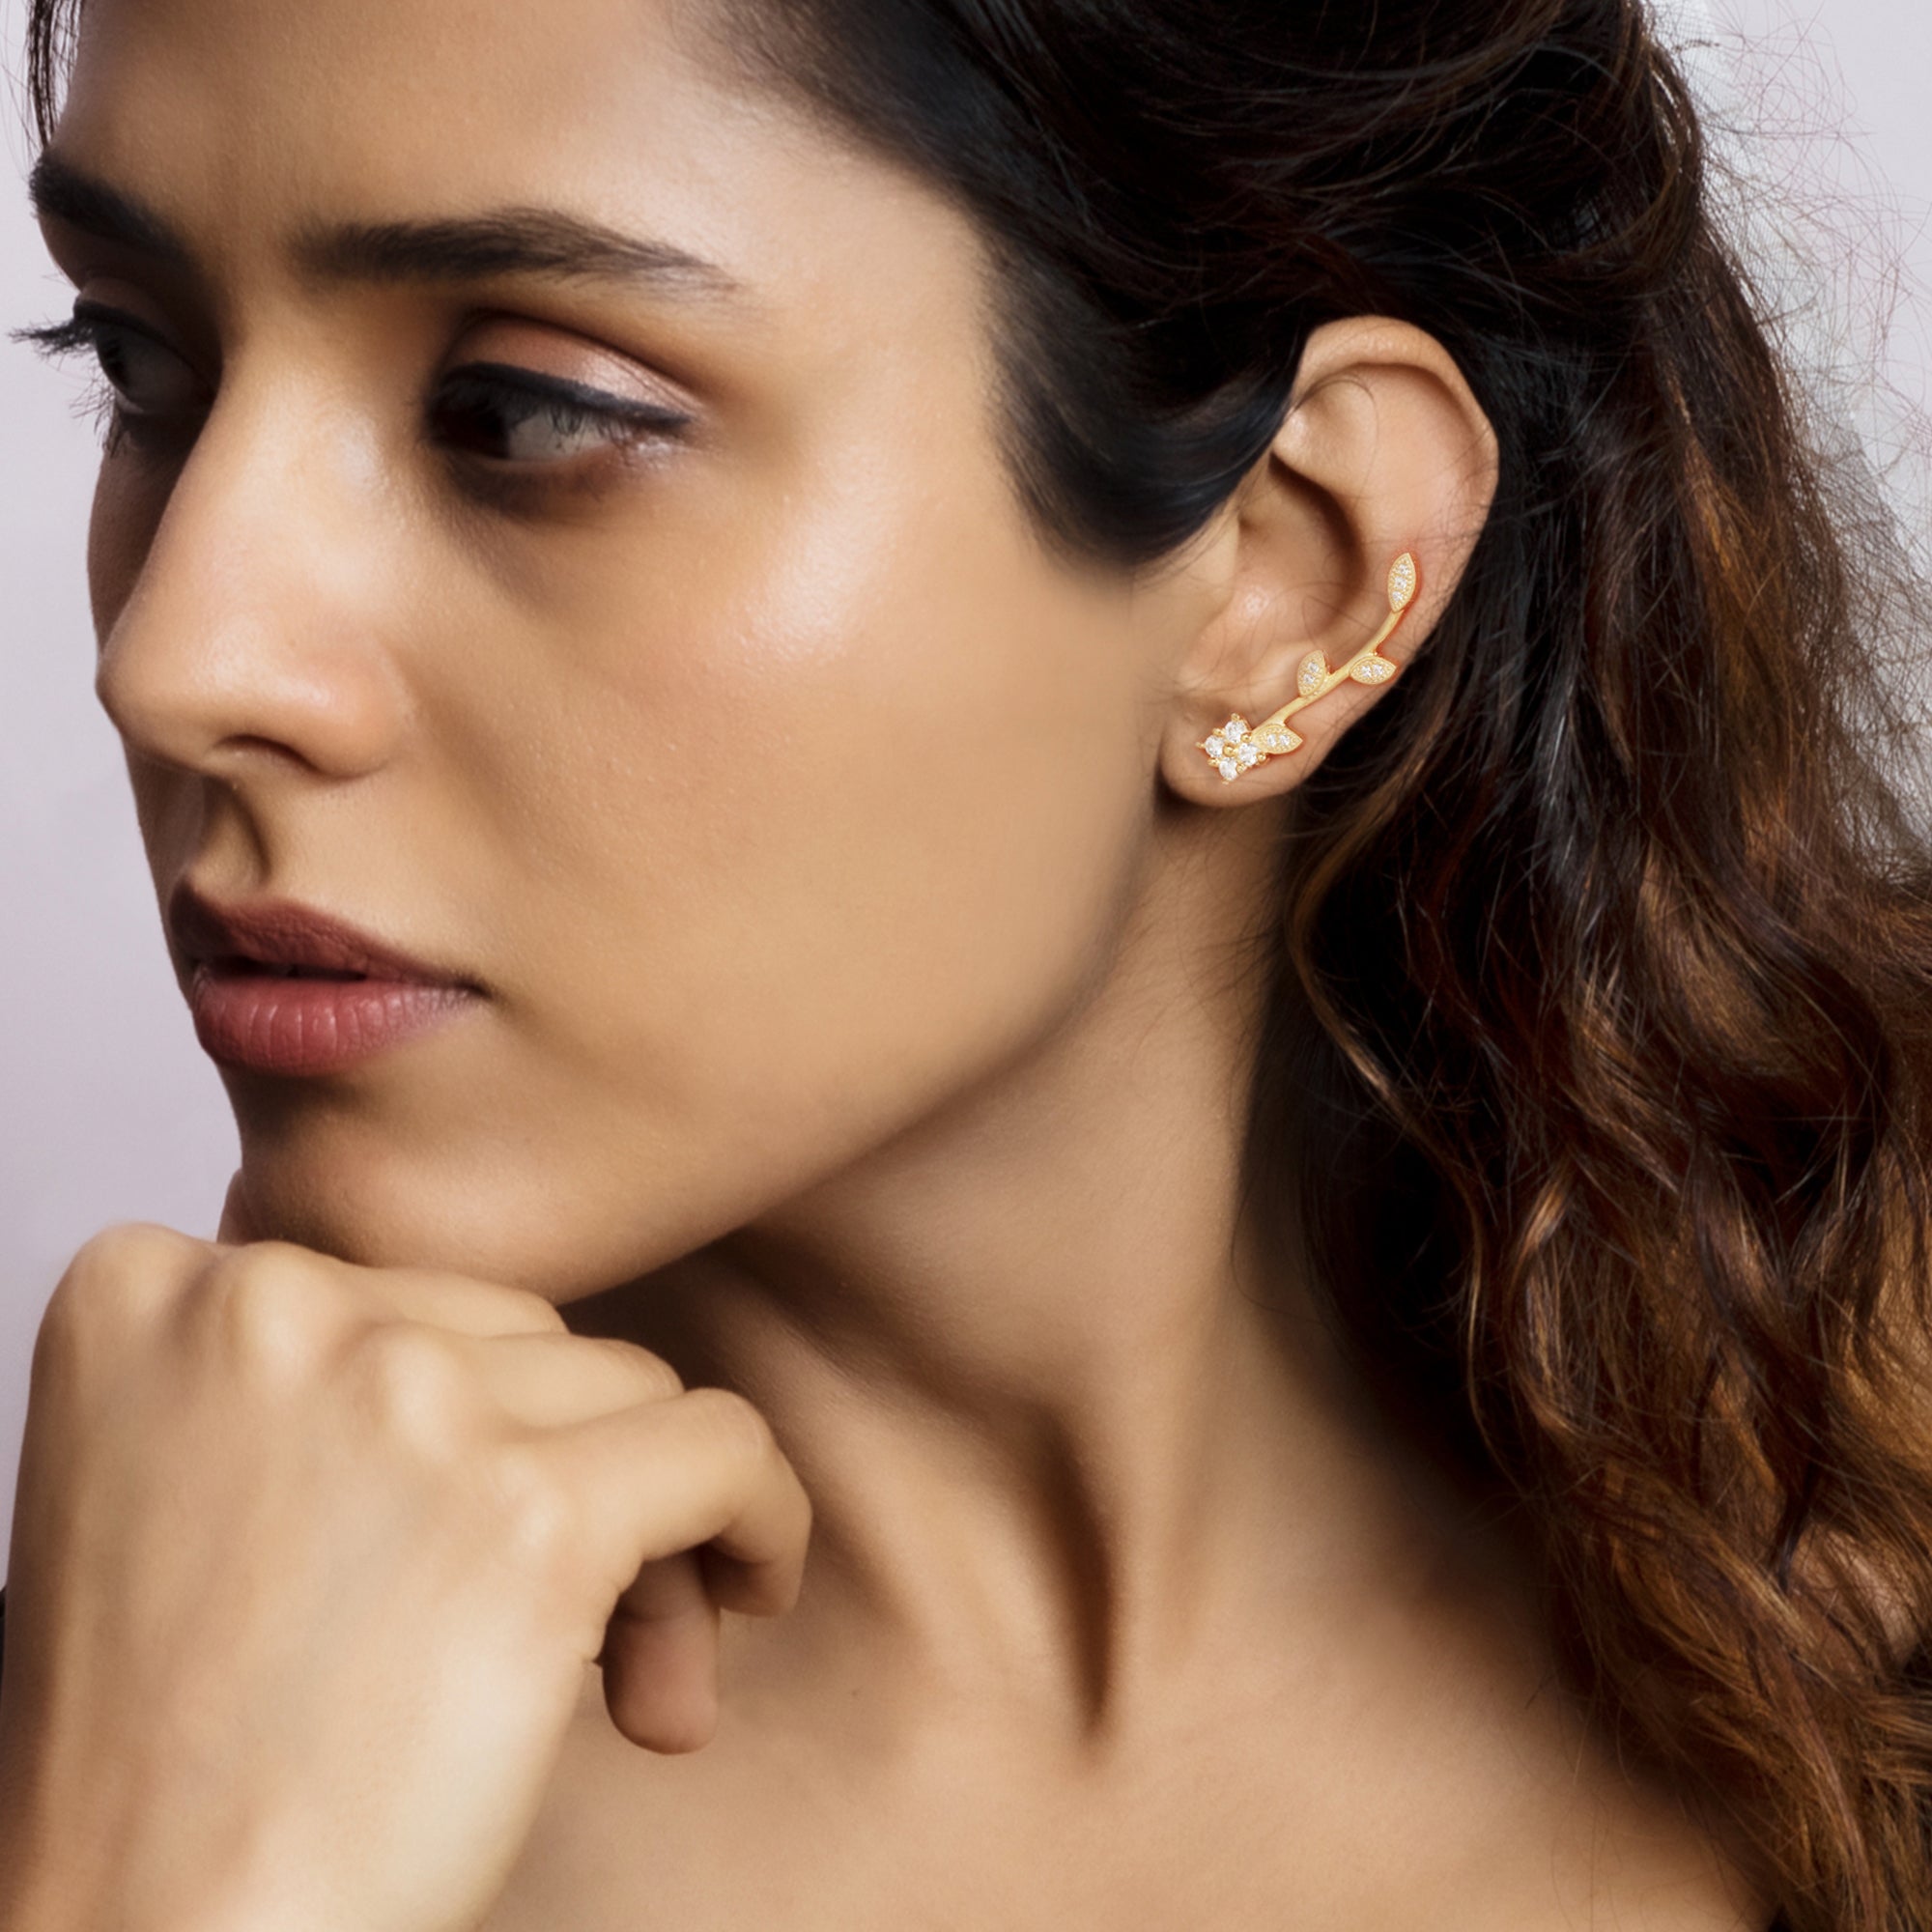 Buy Gold Sparkle Stud Earrings 10 Mm Wood & Resin Earrings Sparkly Dot Stud  Earrings Girl Gift Women Gift Steel Posts for Sensitive Ears Online in  India - Etsy